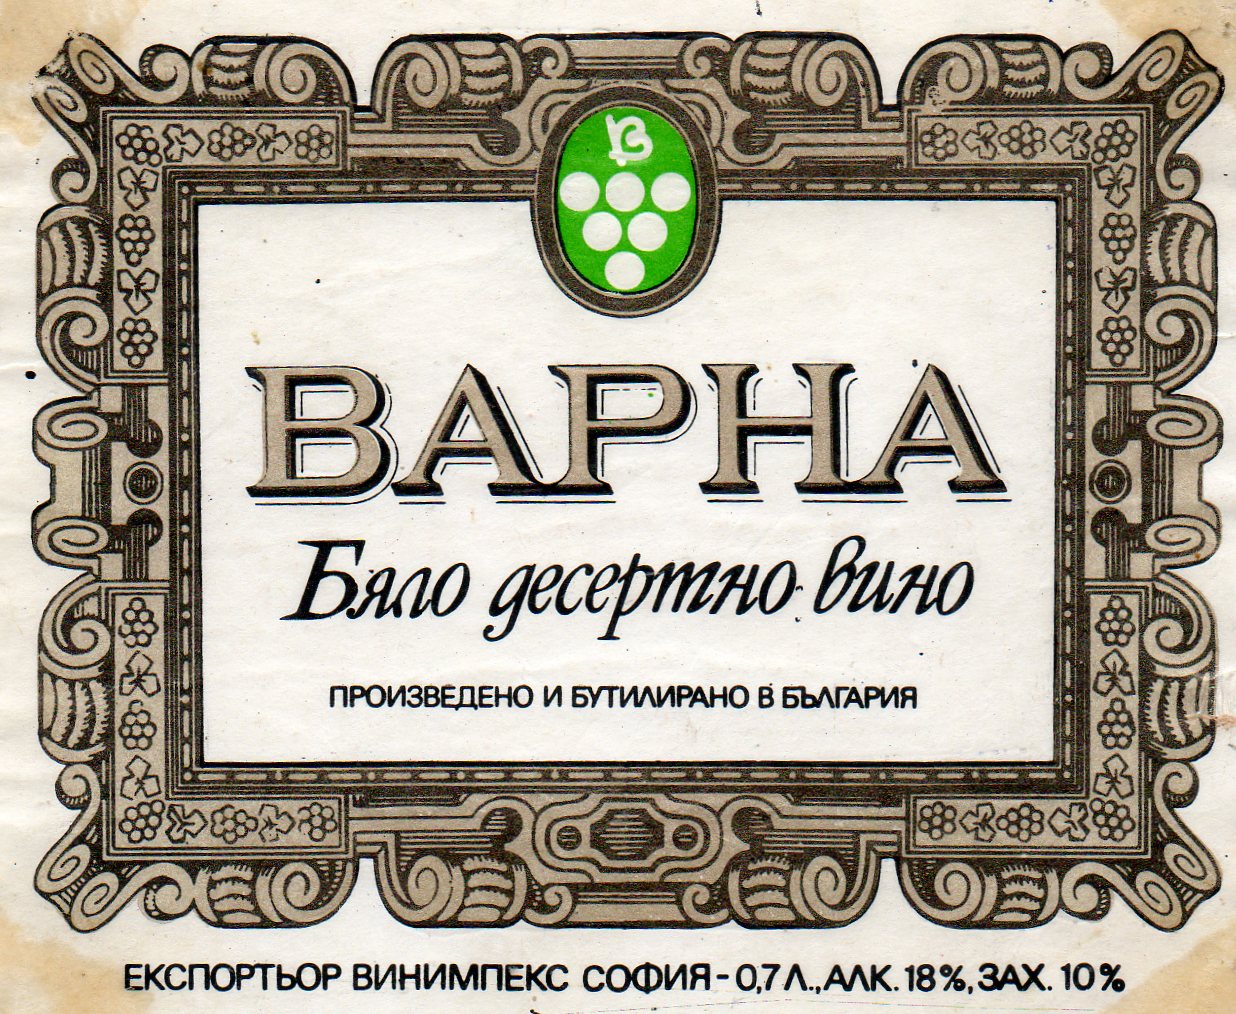 вина болгарии названия